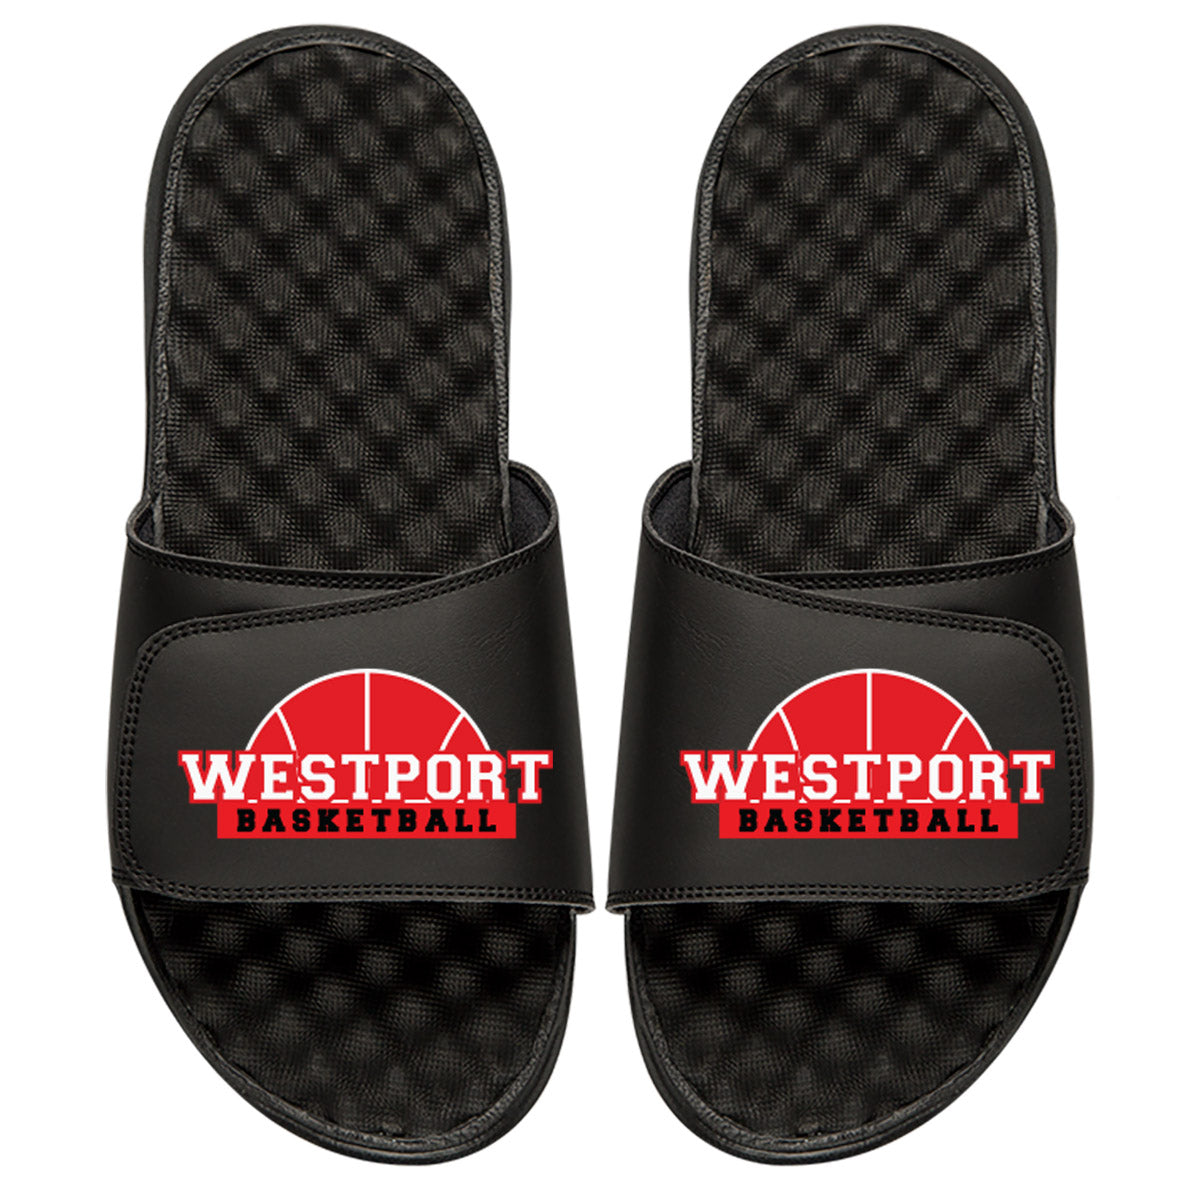 Westport Basketball - ISlide